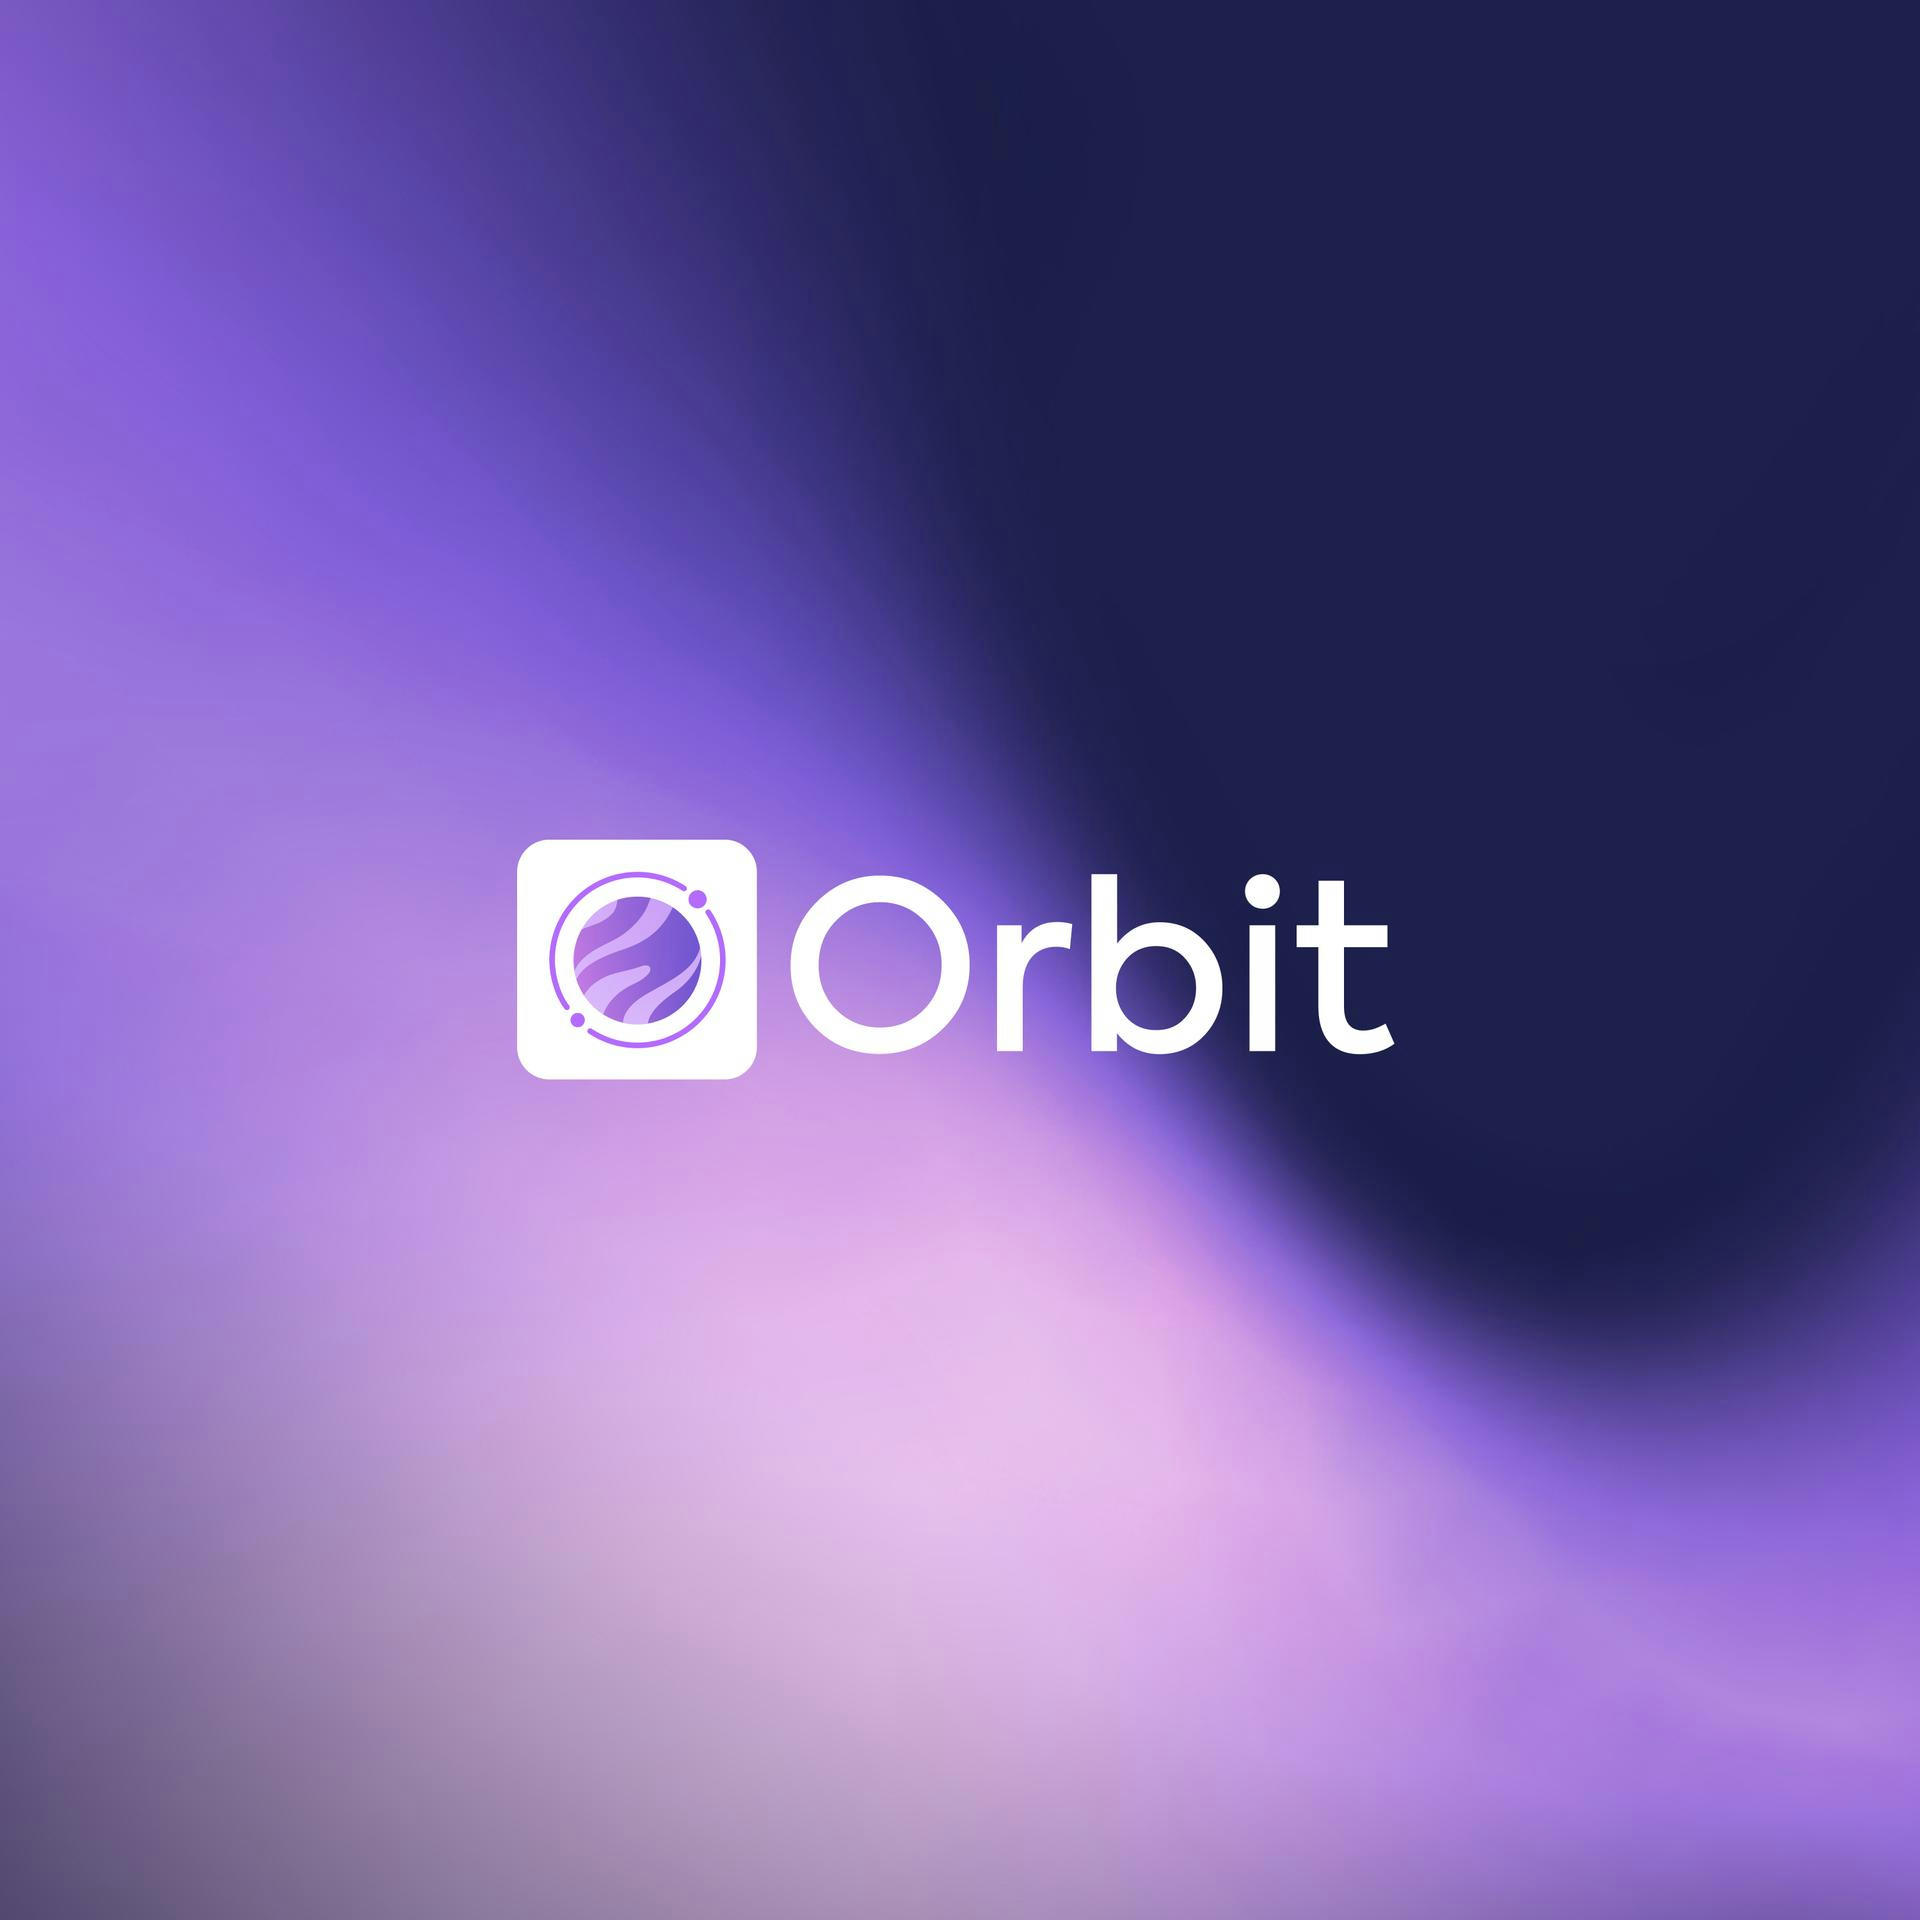 Abstract minimalist motion orbit logo icon Vector Image